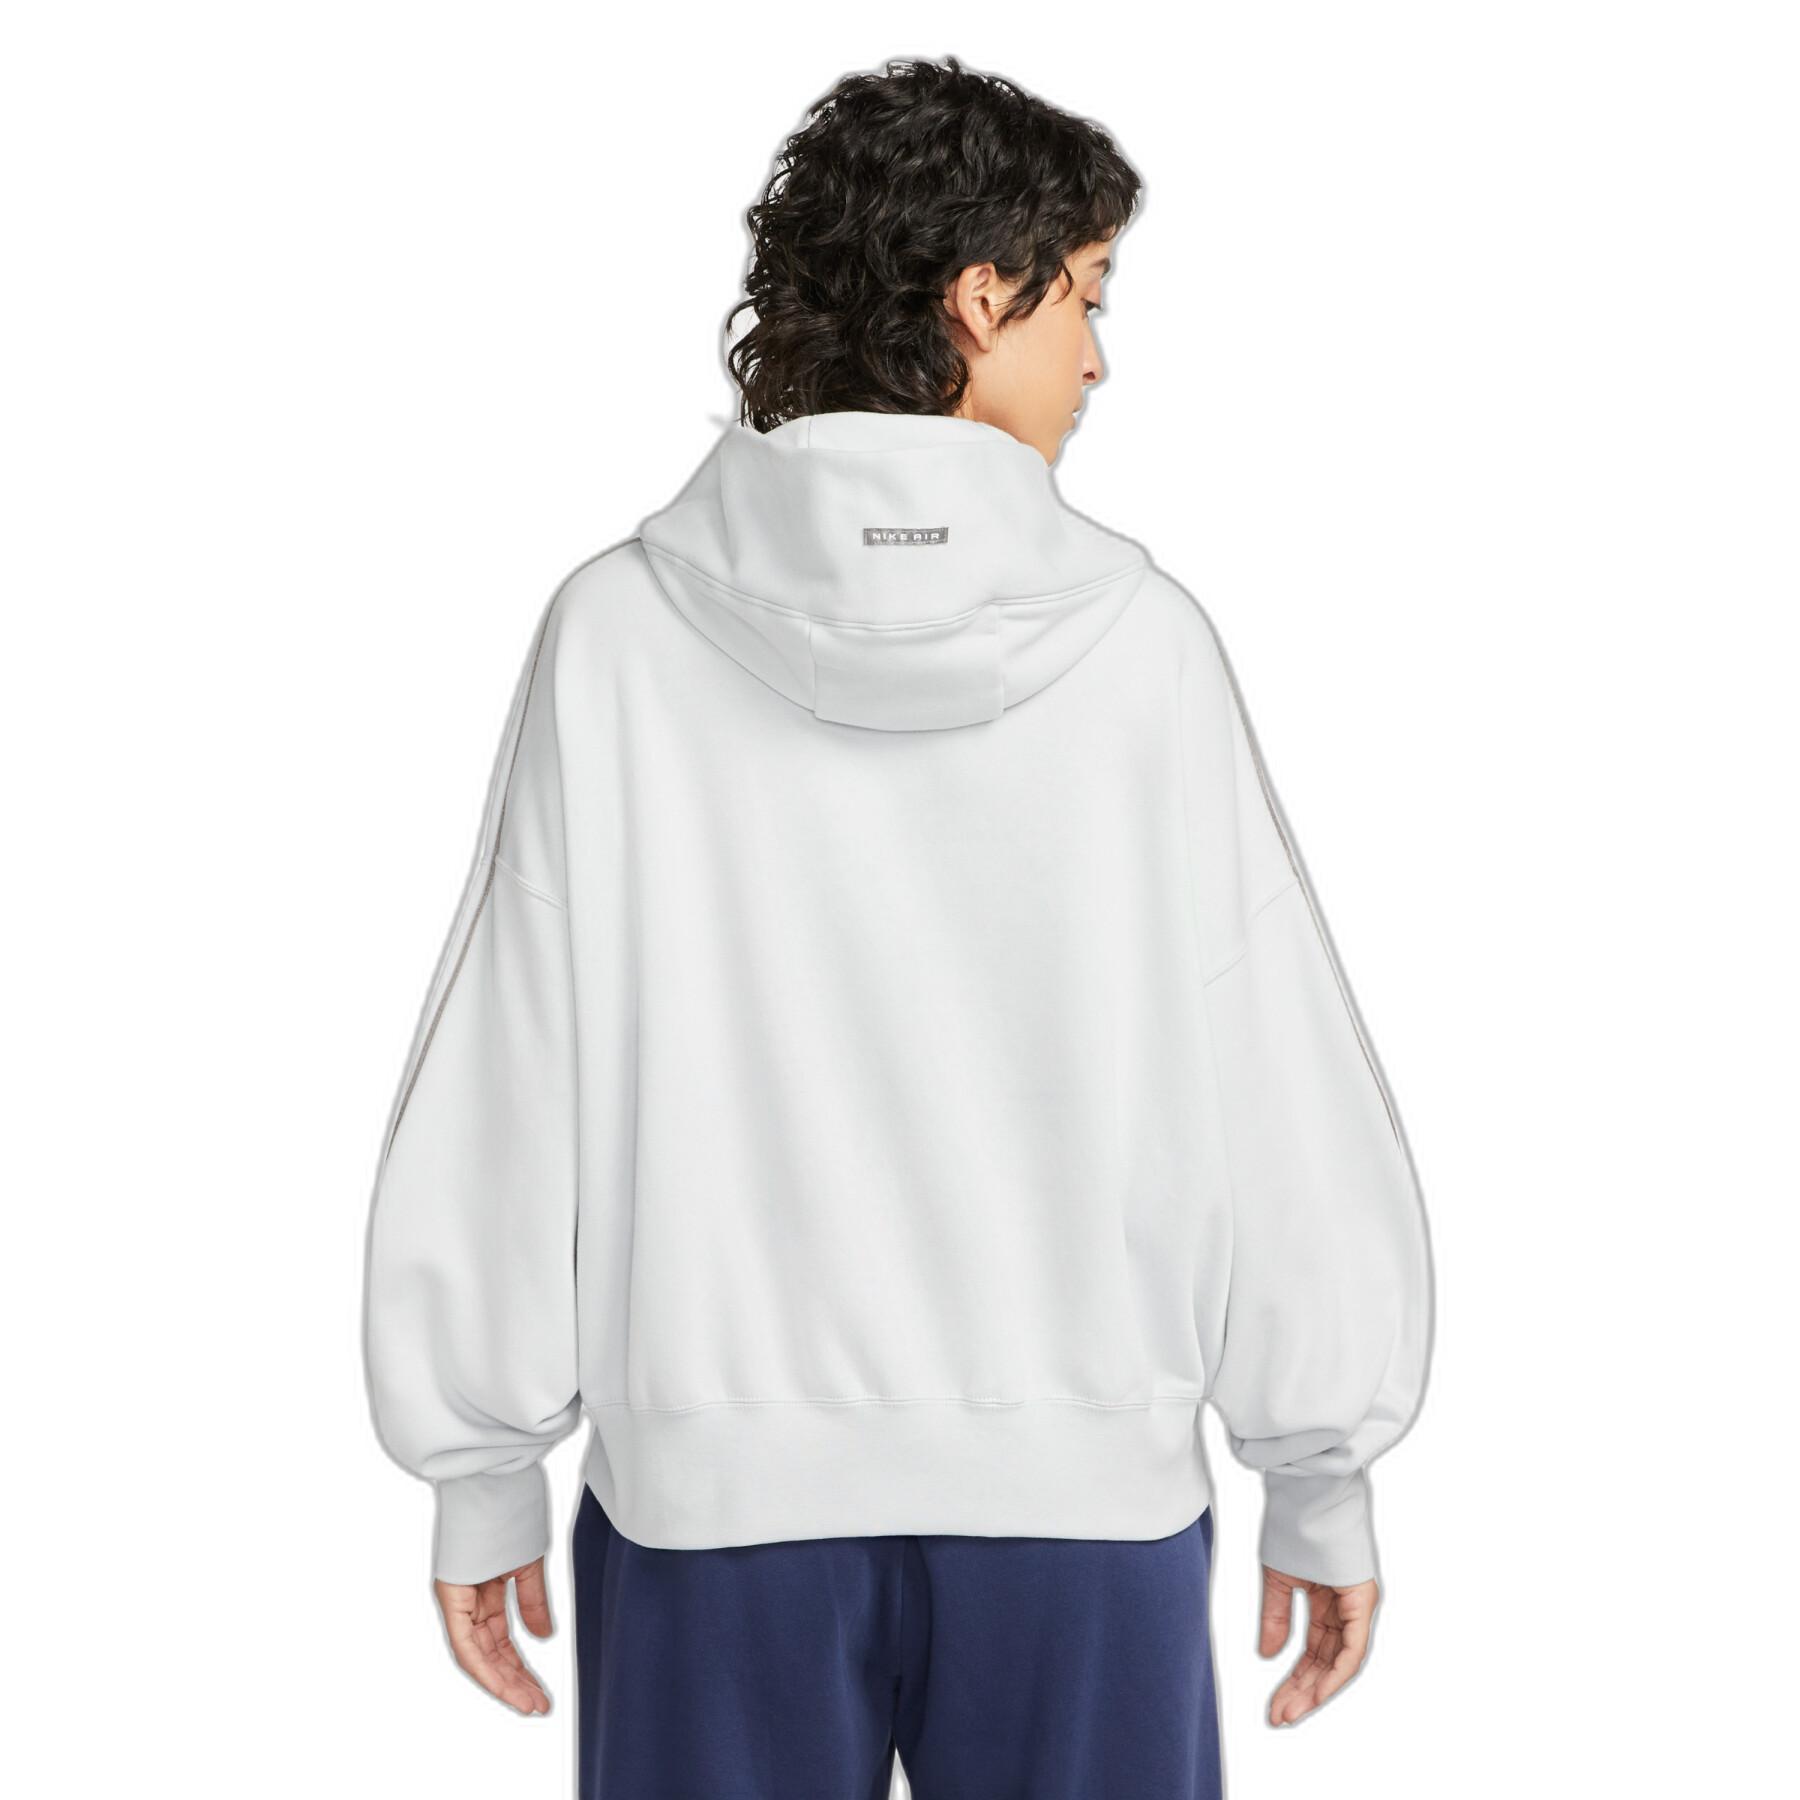 Dames fleece sweater met capuchon Nike Sportswear Air